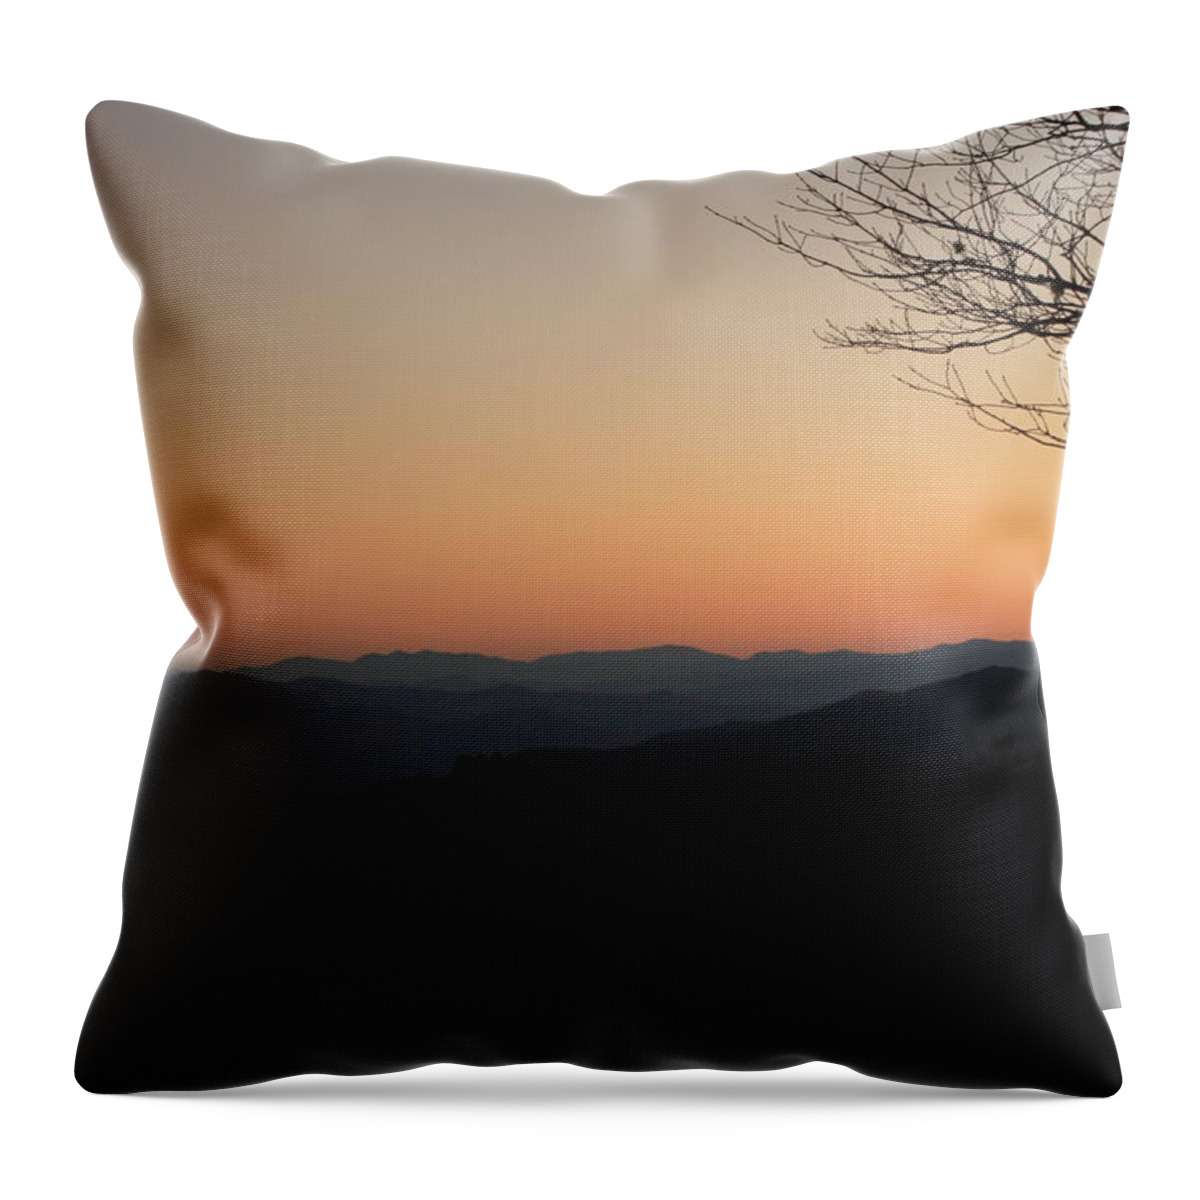 Nunweiler Throw Pillow featuring the photograph Smoky Mountain Sunset by Nunweiler Photography